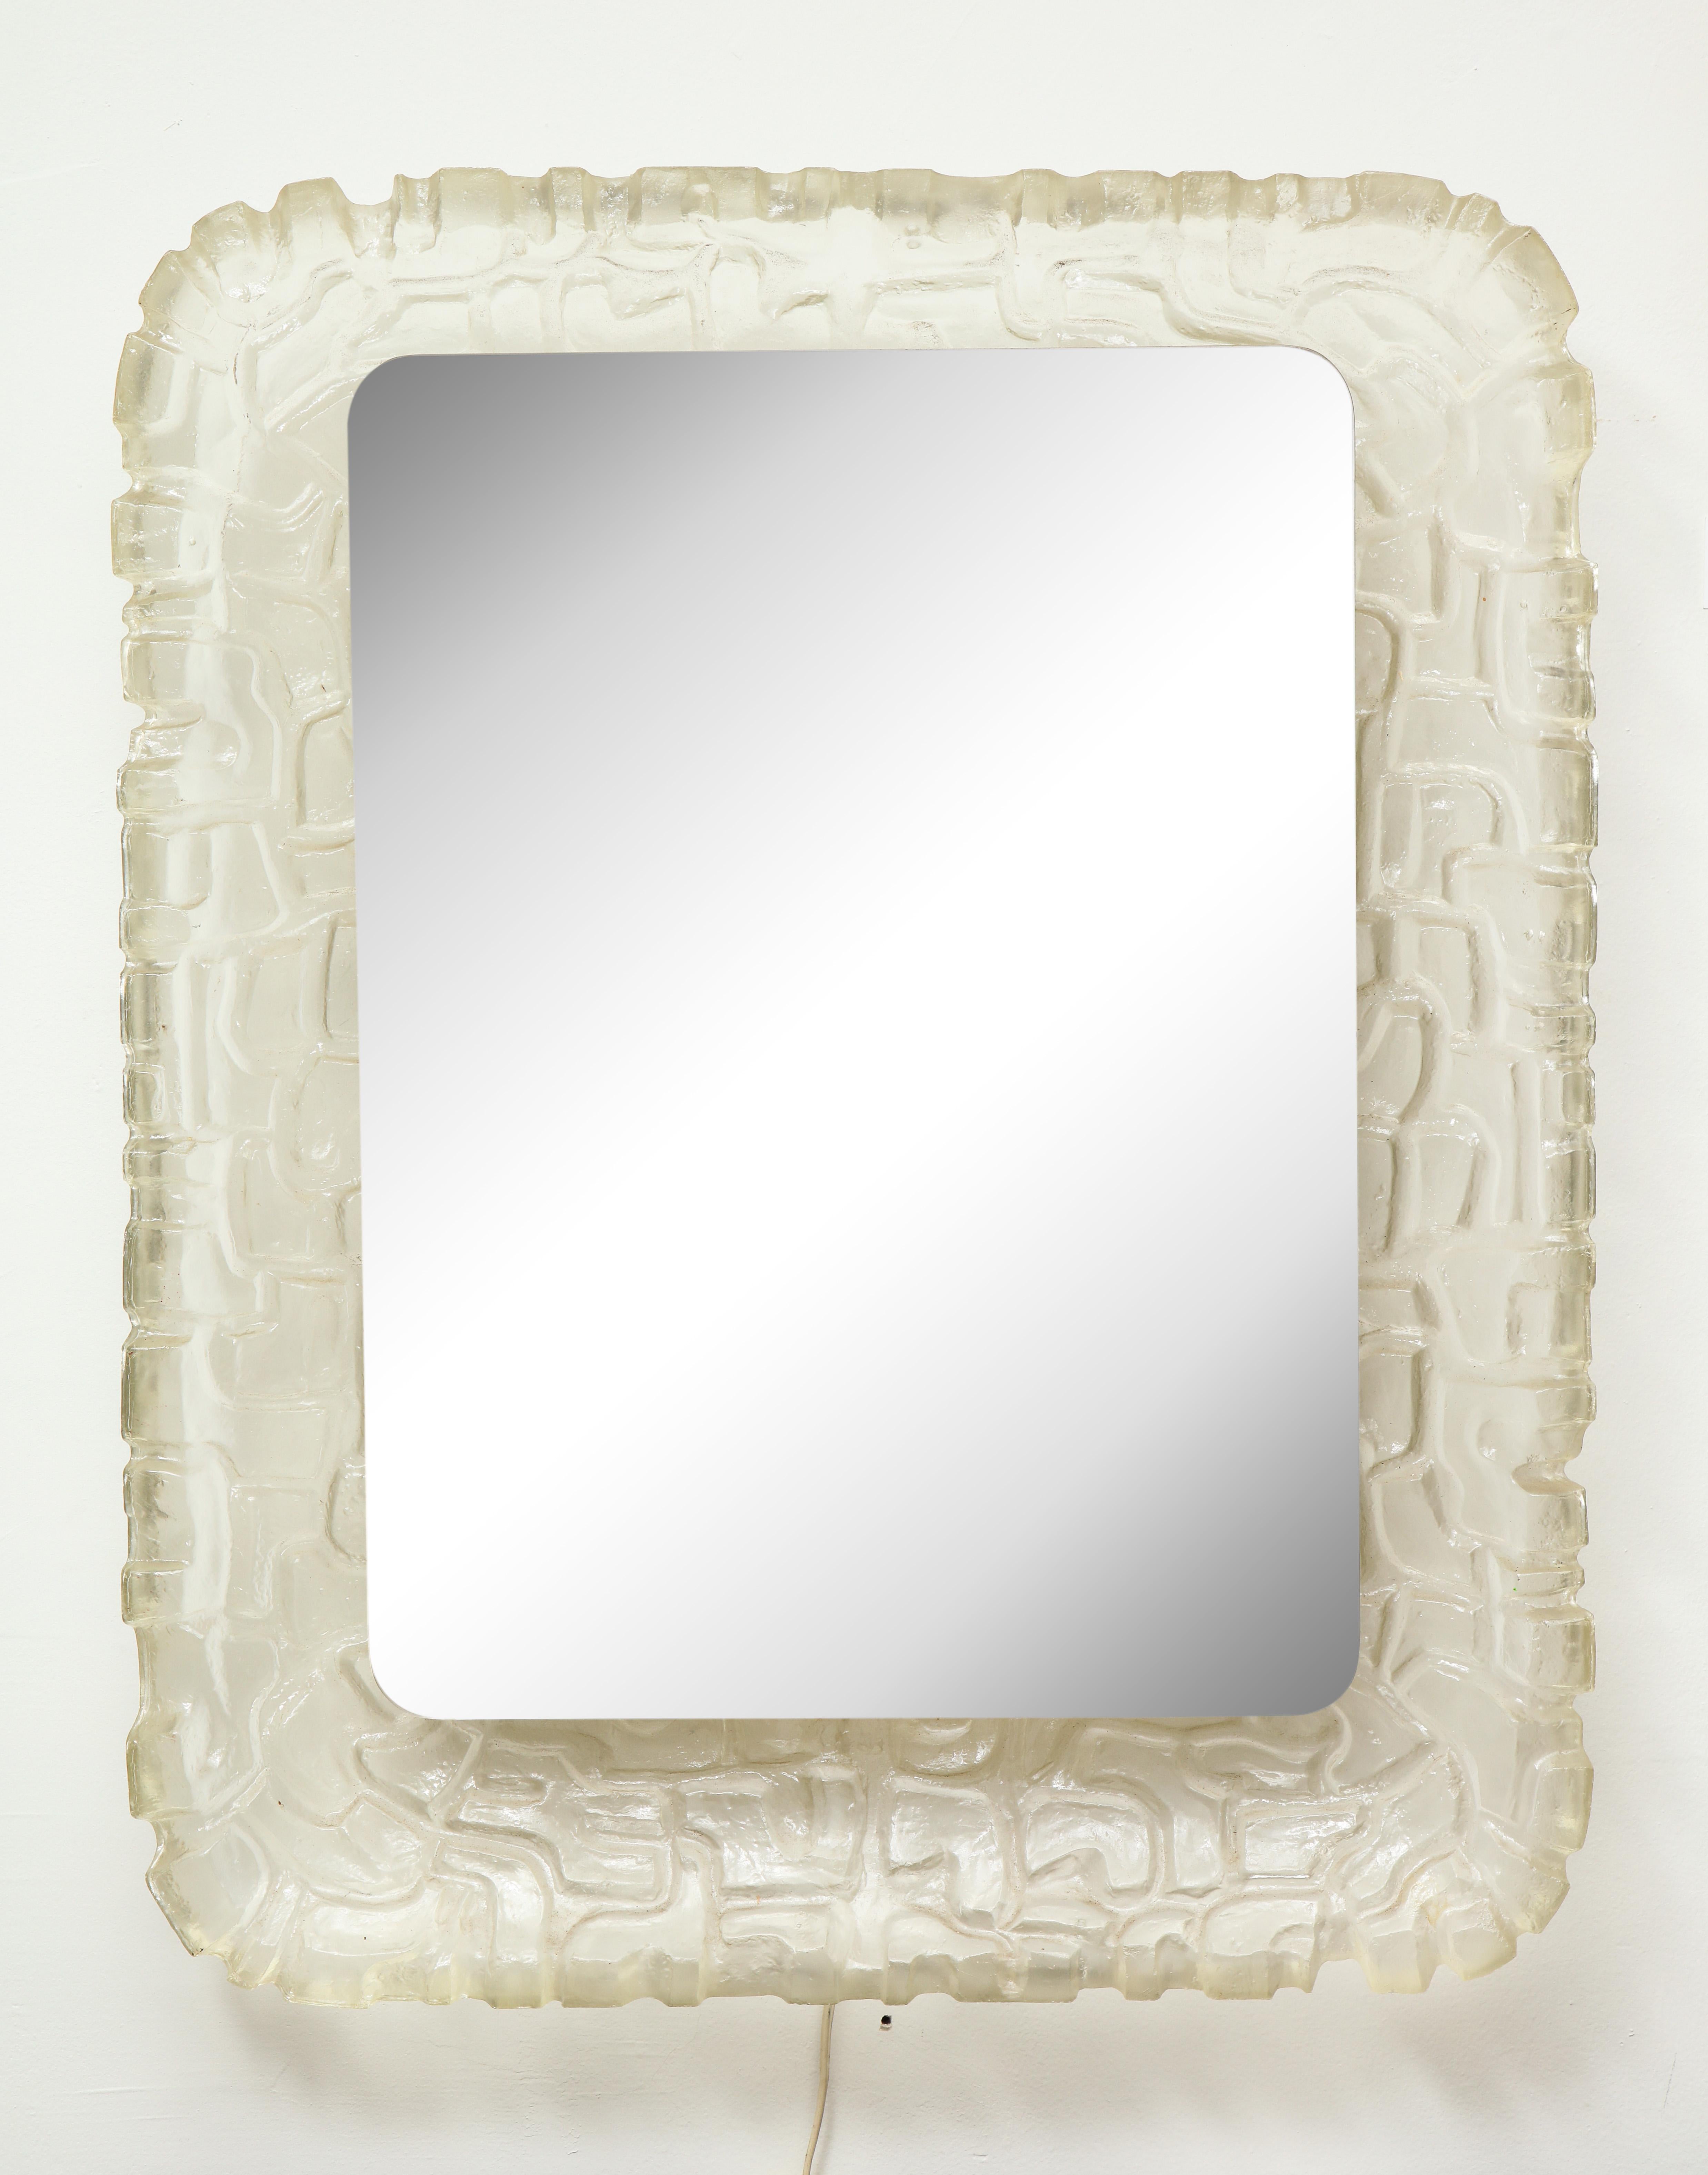 German Illuminated Rectangular Mirror with Molded Resin Scalloped Frame